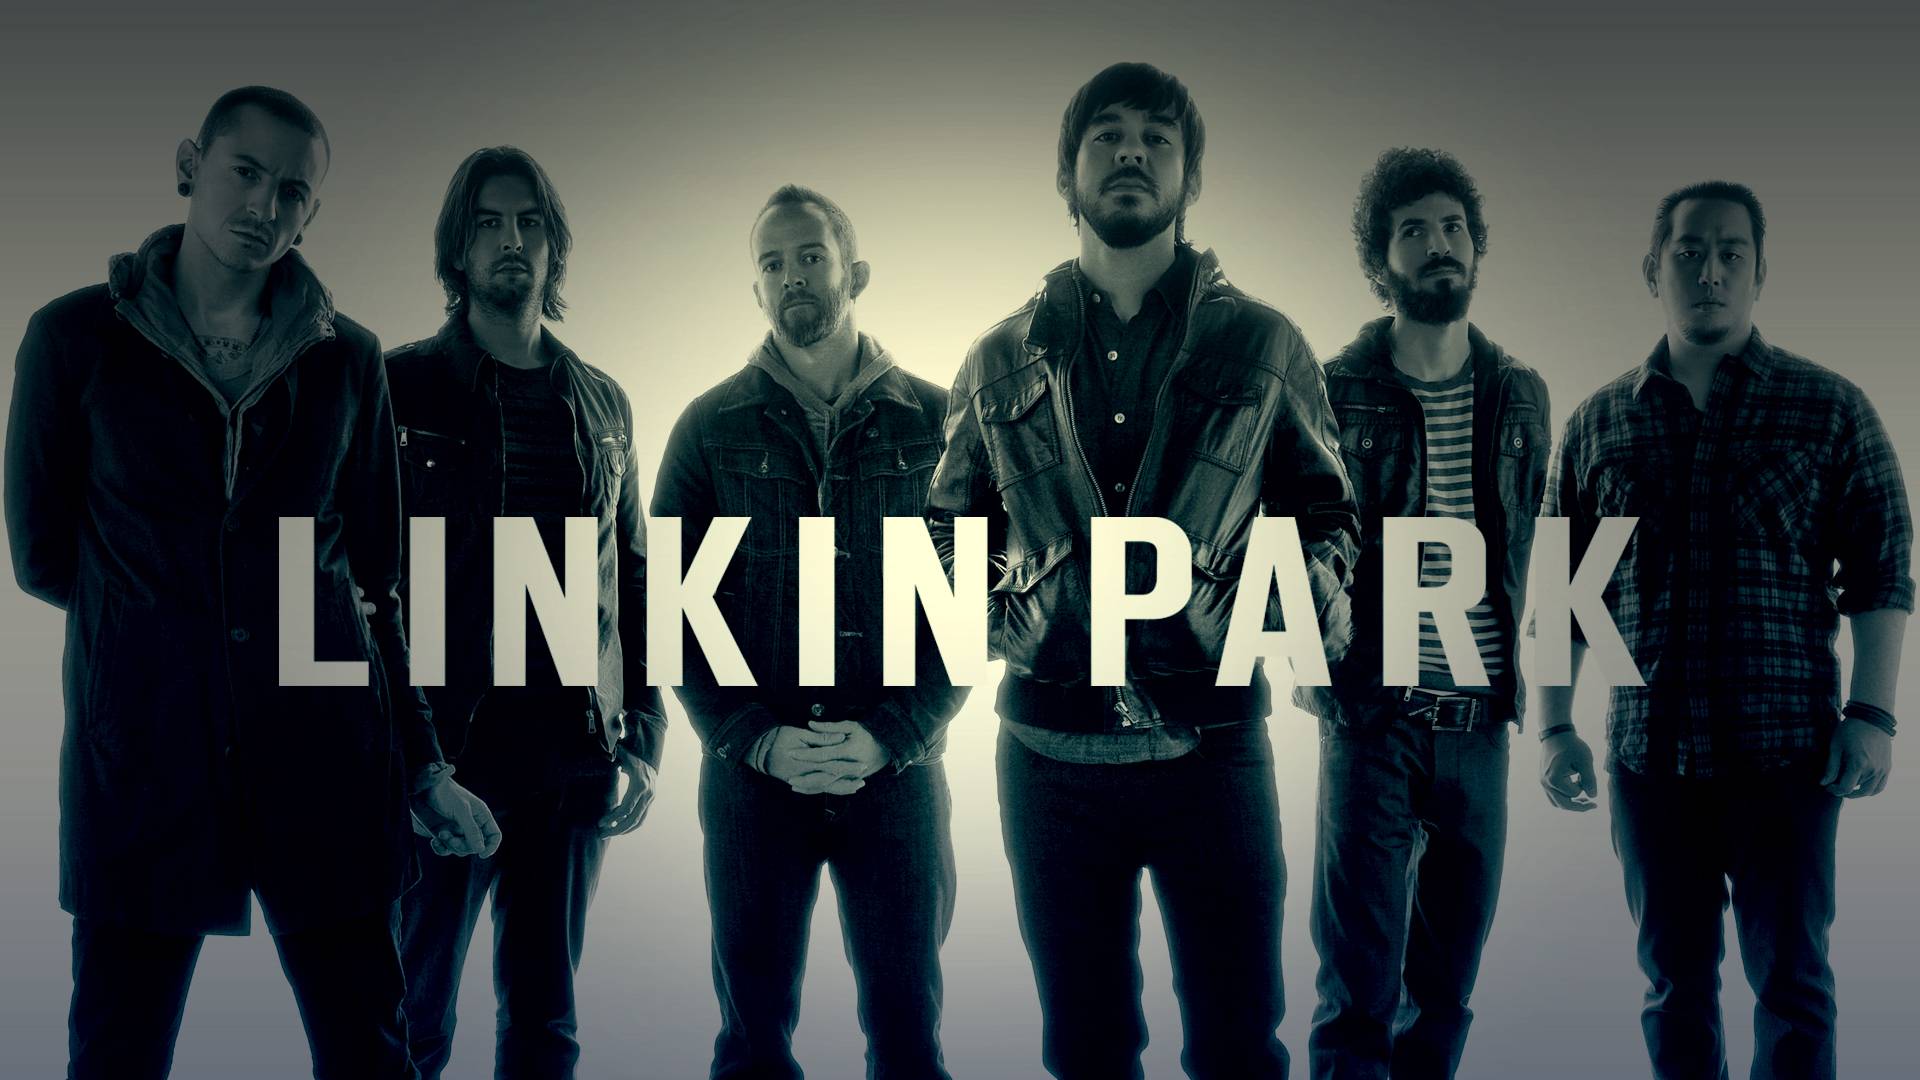 Linkin Park Wallpaper for desktop and mobile